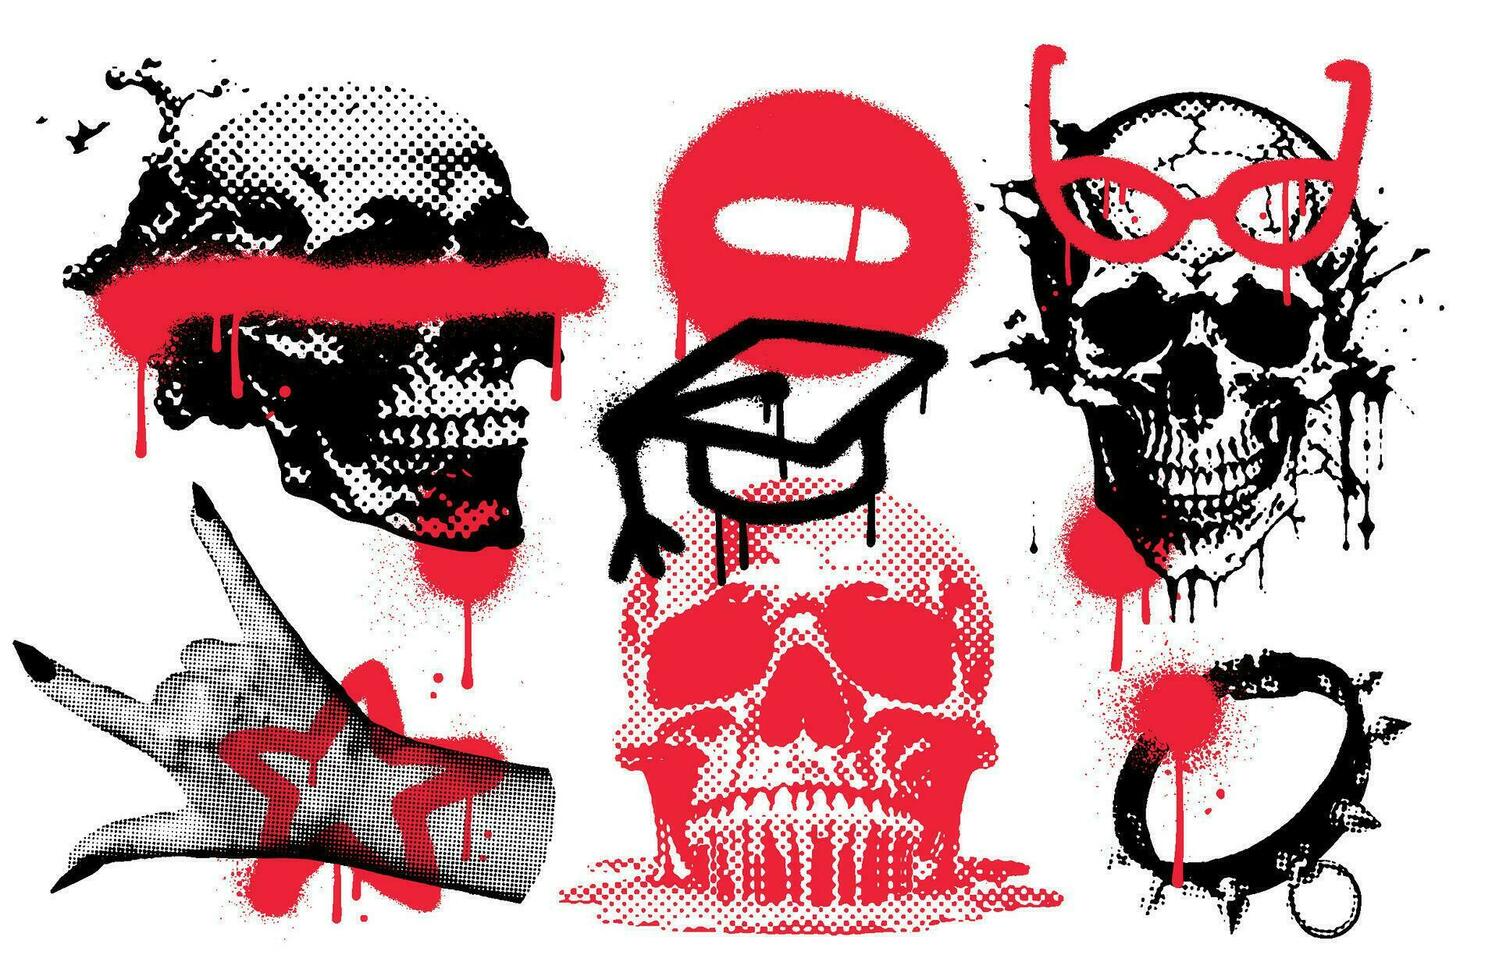 Urban Street Art underground elements - graffiti overspray, star, distorted skulls, for t-shirt, merch, apparel, streetwear. 90s brutal Underground, hip-hop, gangsta acid elements. Vector